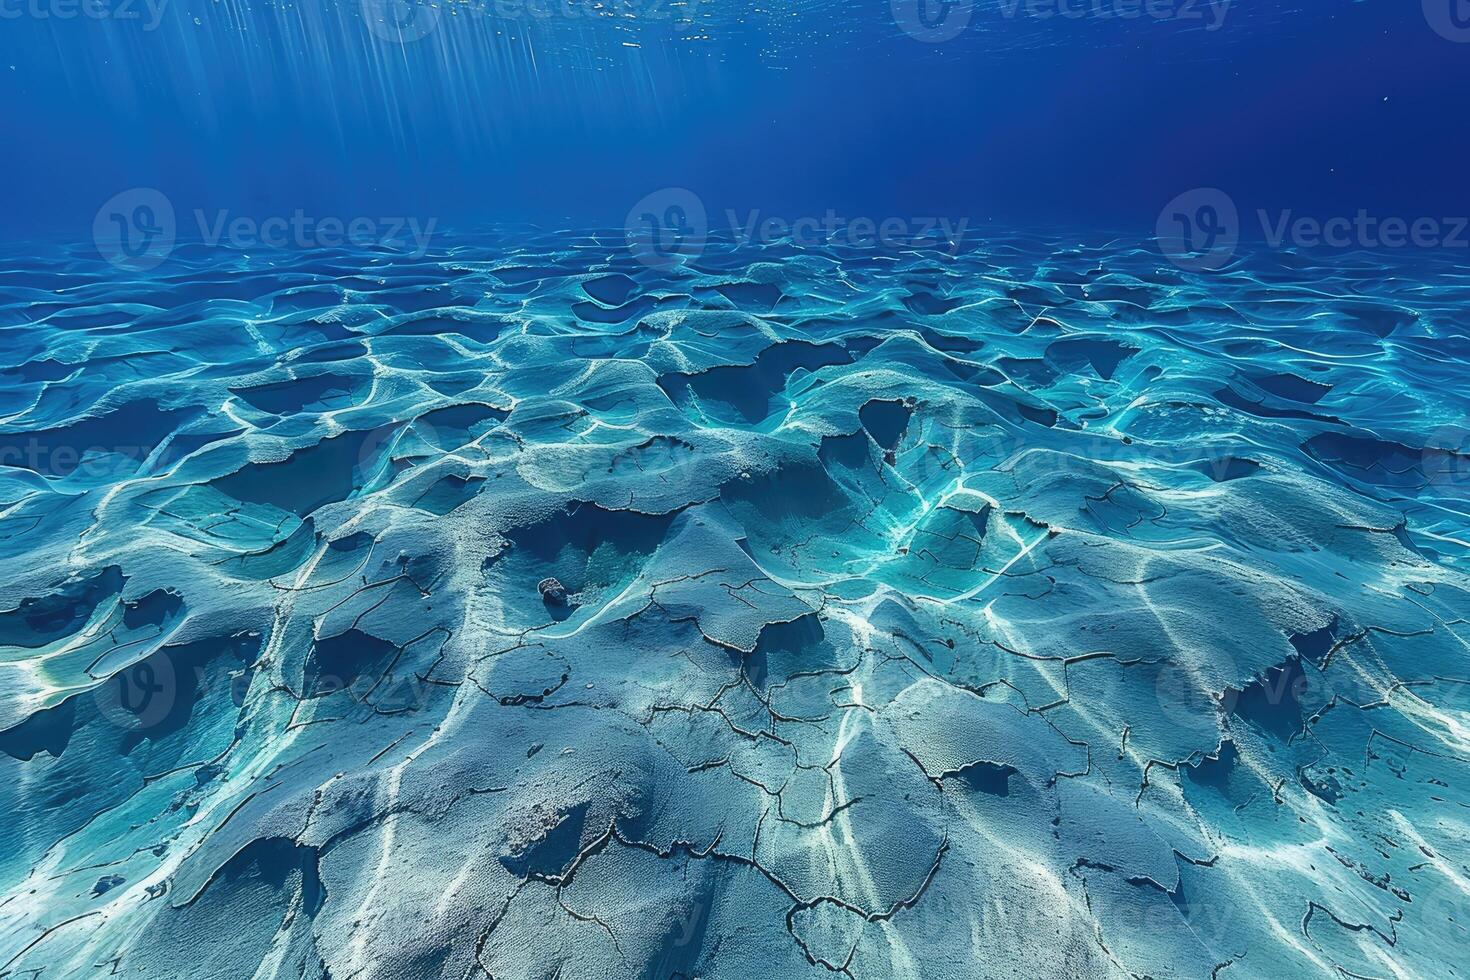 profundo mar embaixo da agua profissional publicidade Comida fotografia foto